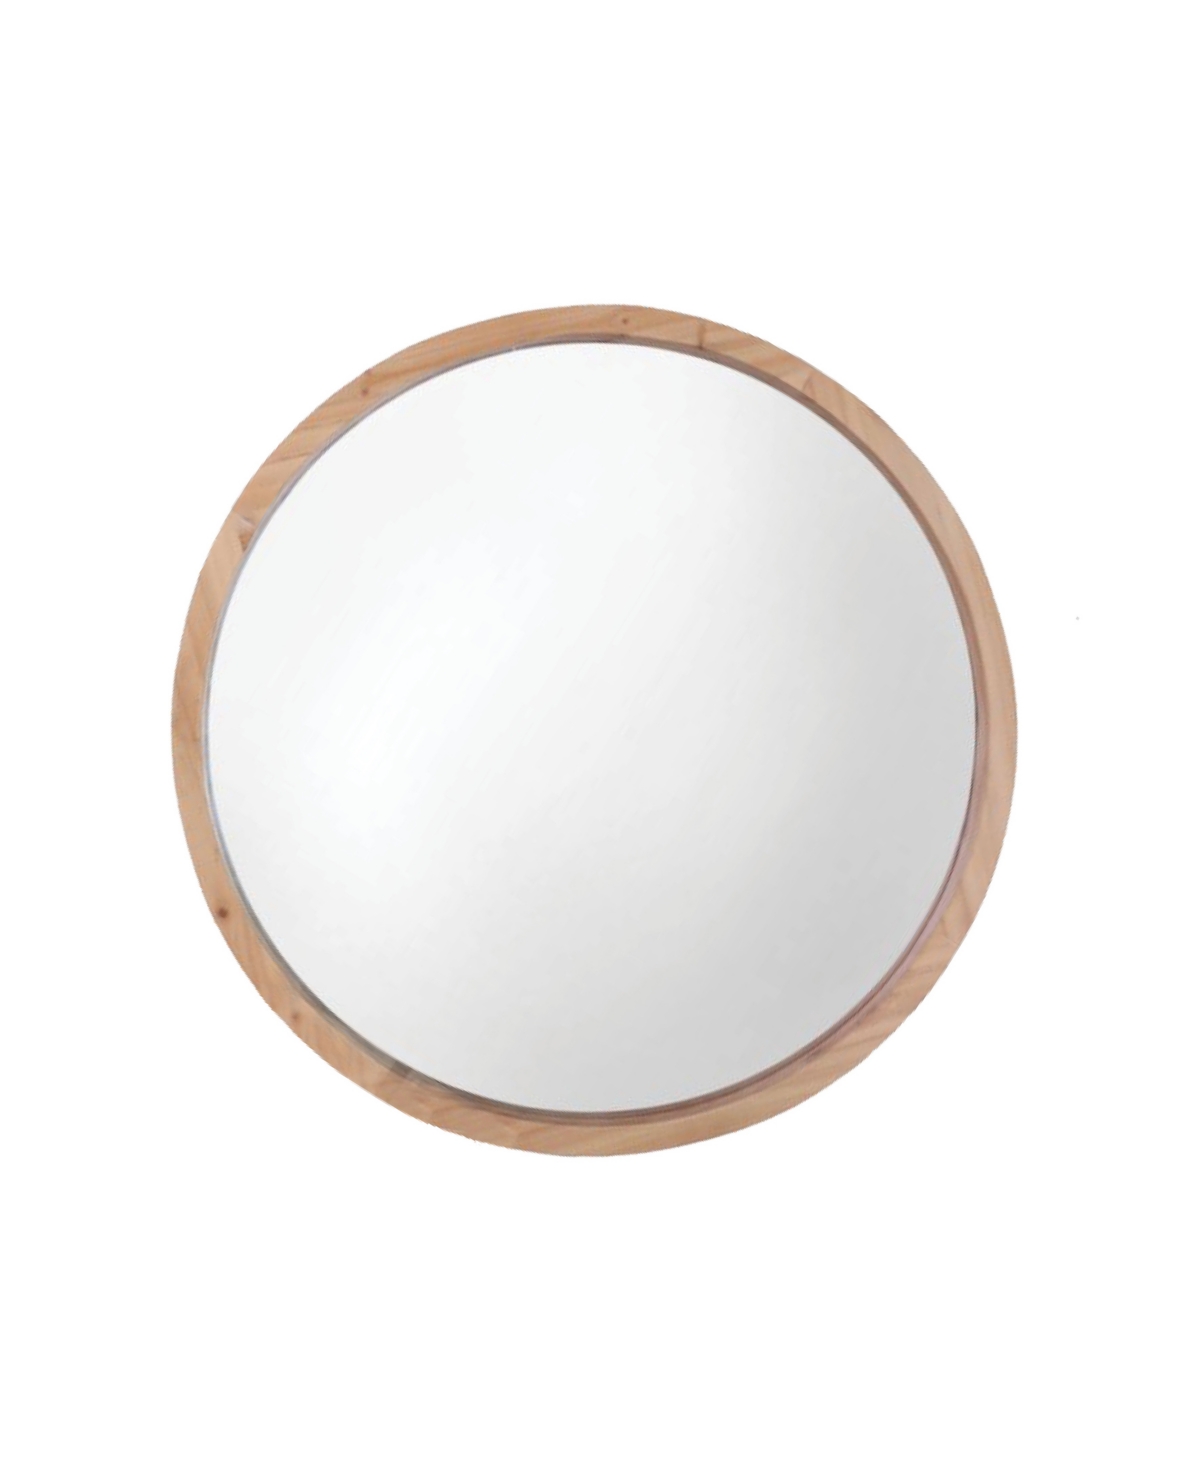 Round Natural Wood Frame Bathroom Vanity Wall Mirror, 30" D - Natural